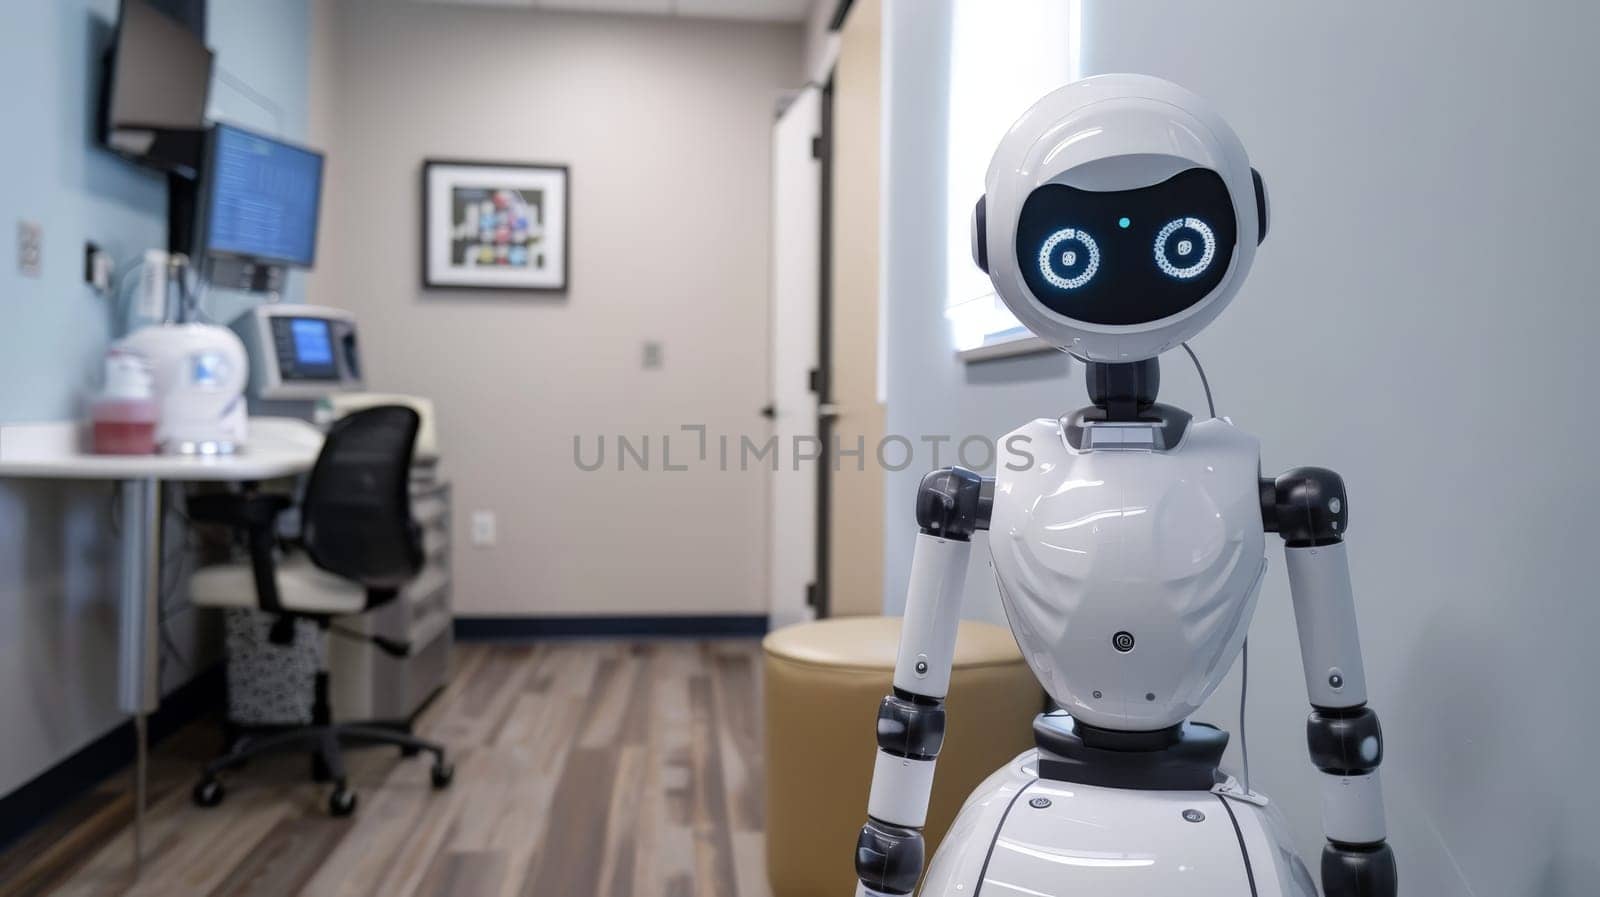 A robot in a hospital lobby, Robot nurse service technology in hospital, Generative AI.